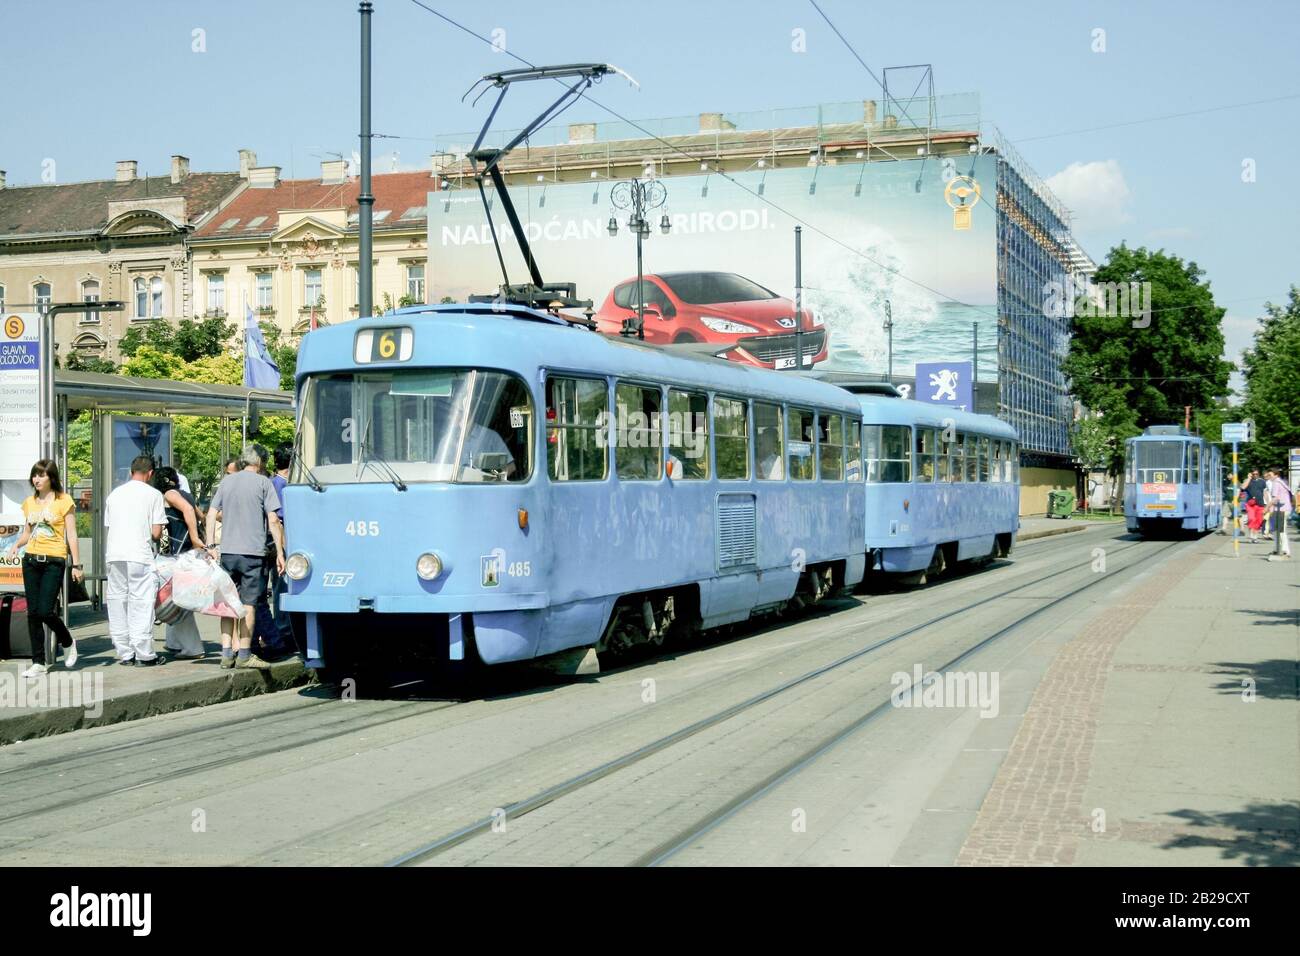 ZAGREB, CROATIA - JUNE 1, 2008: Tatra T4YU tram, belonging to the Zagreb Tramway system, also called zagrebacki elektricni tramvaj, on the glavni kolo Stock Photo